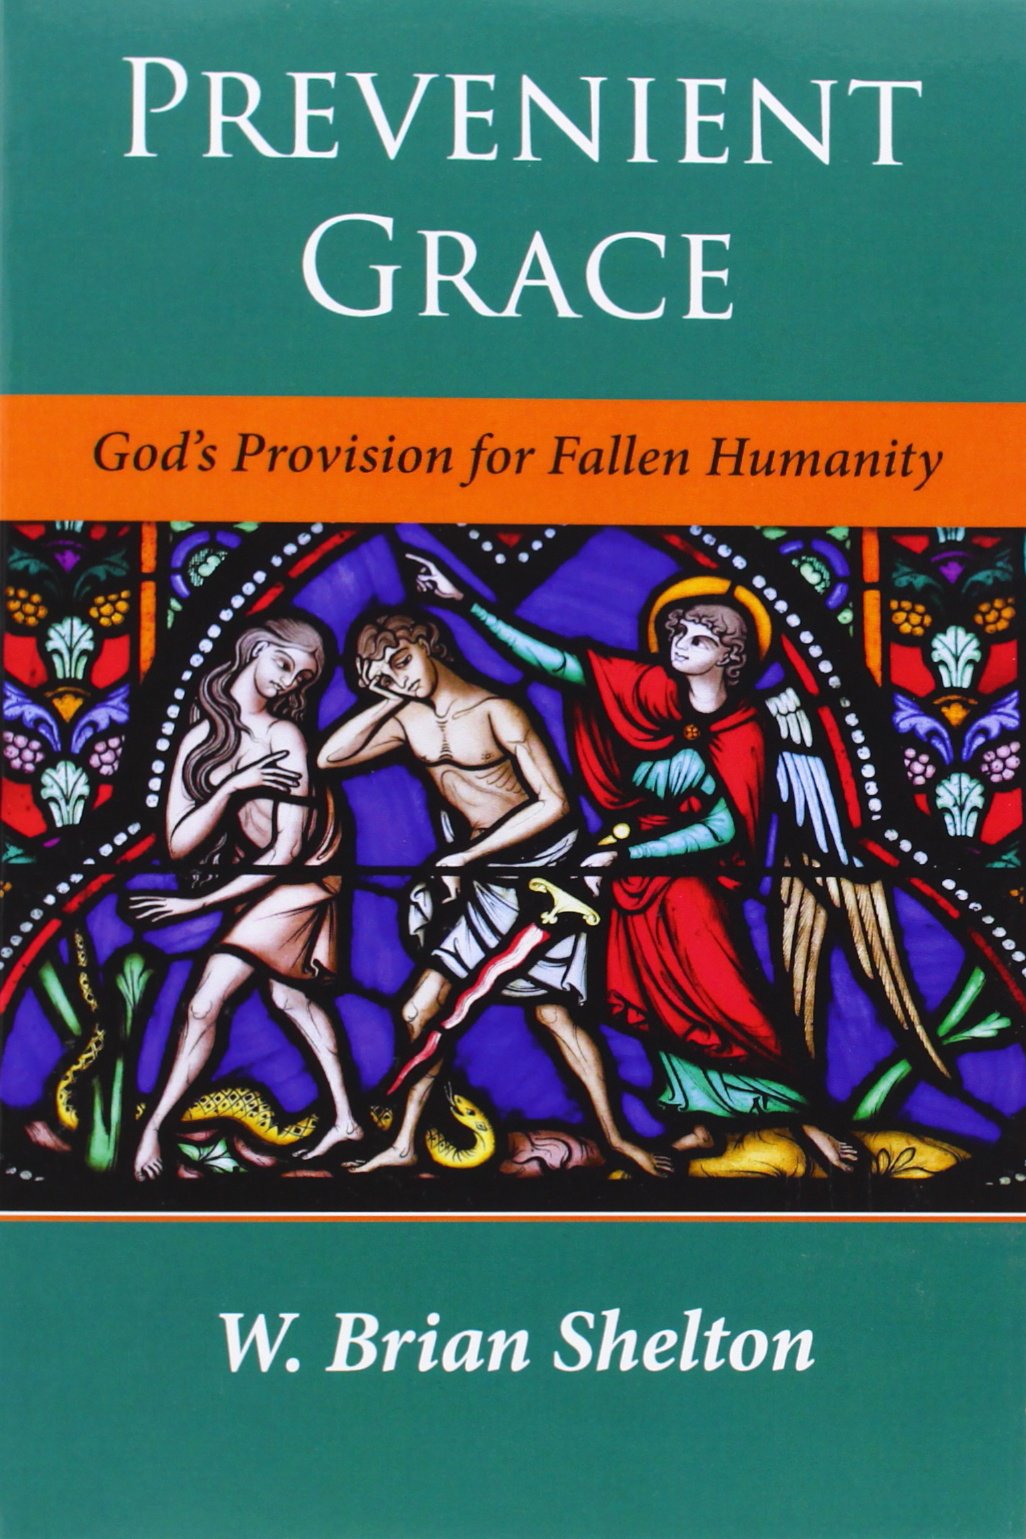 Prevenient Grace book.jpg